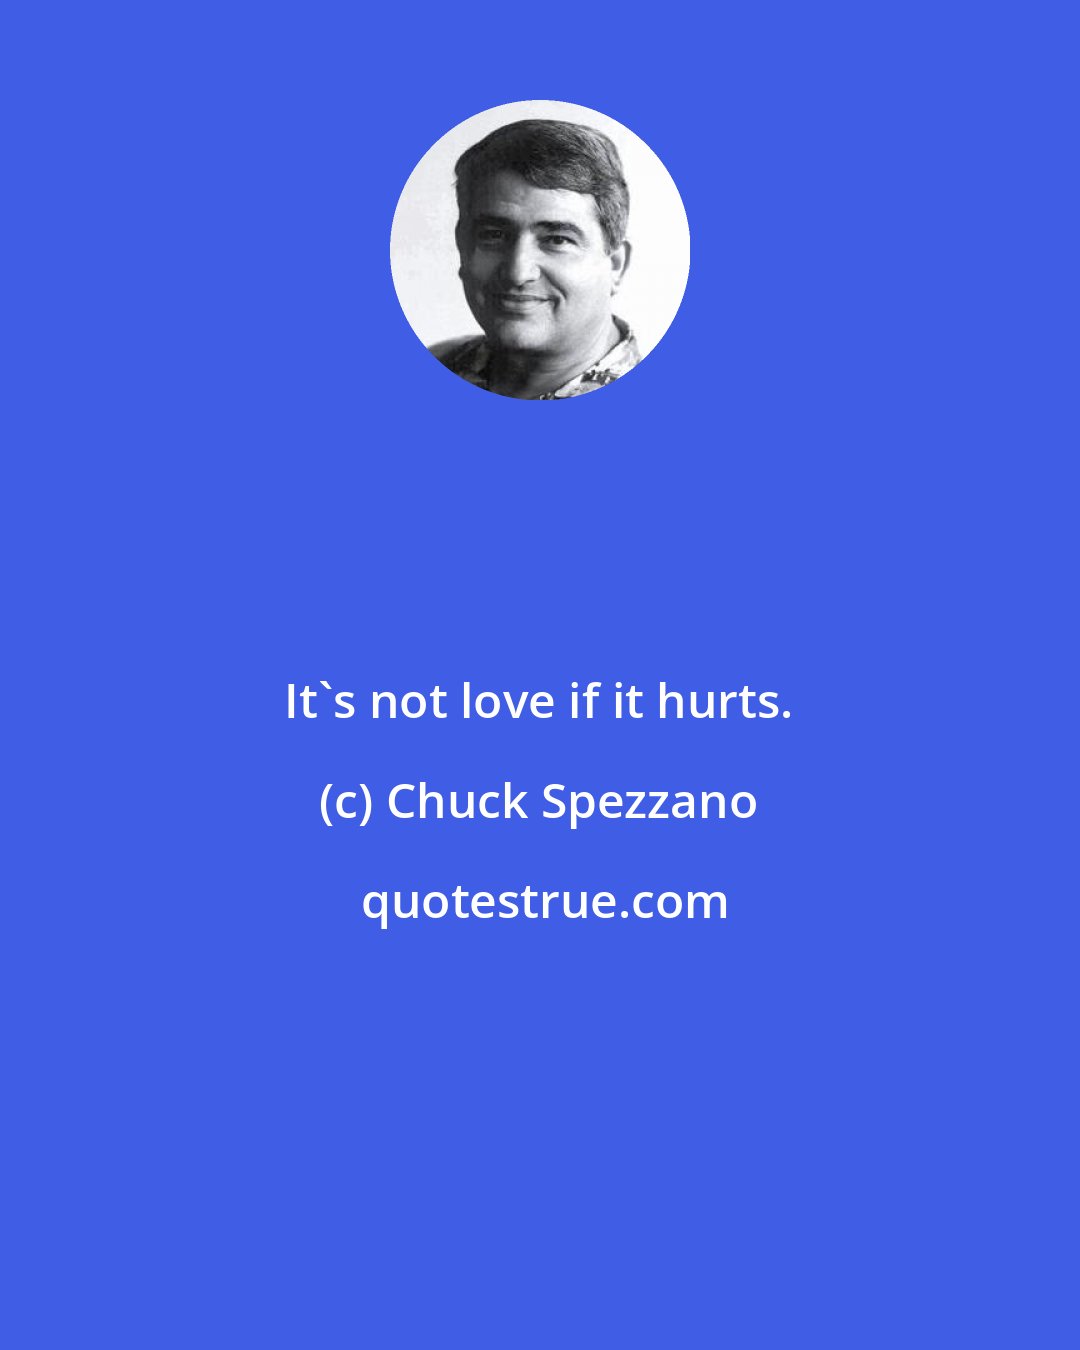 Chuck Spezzano: It's not love if it hurts.